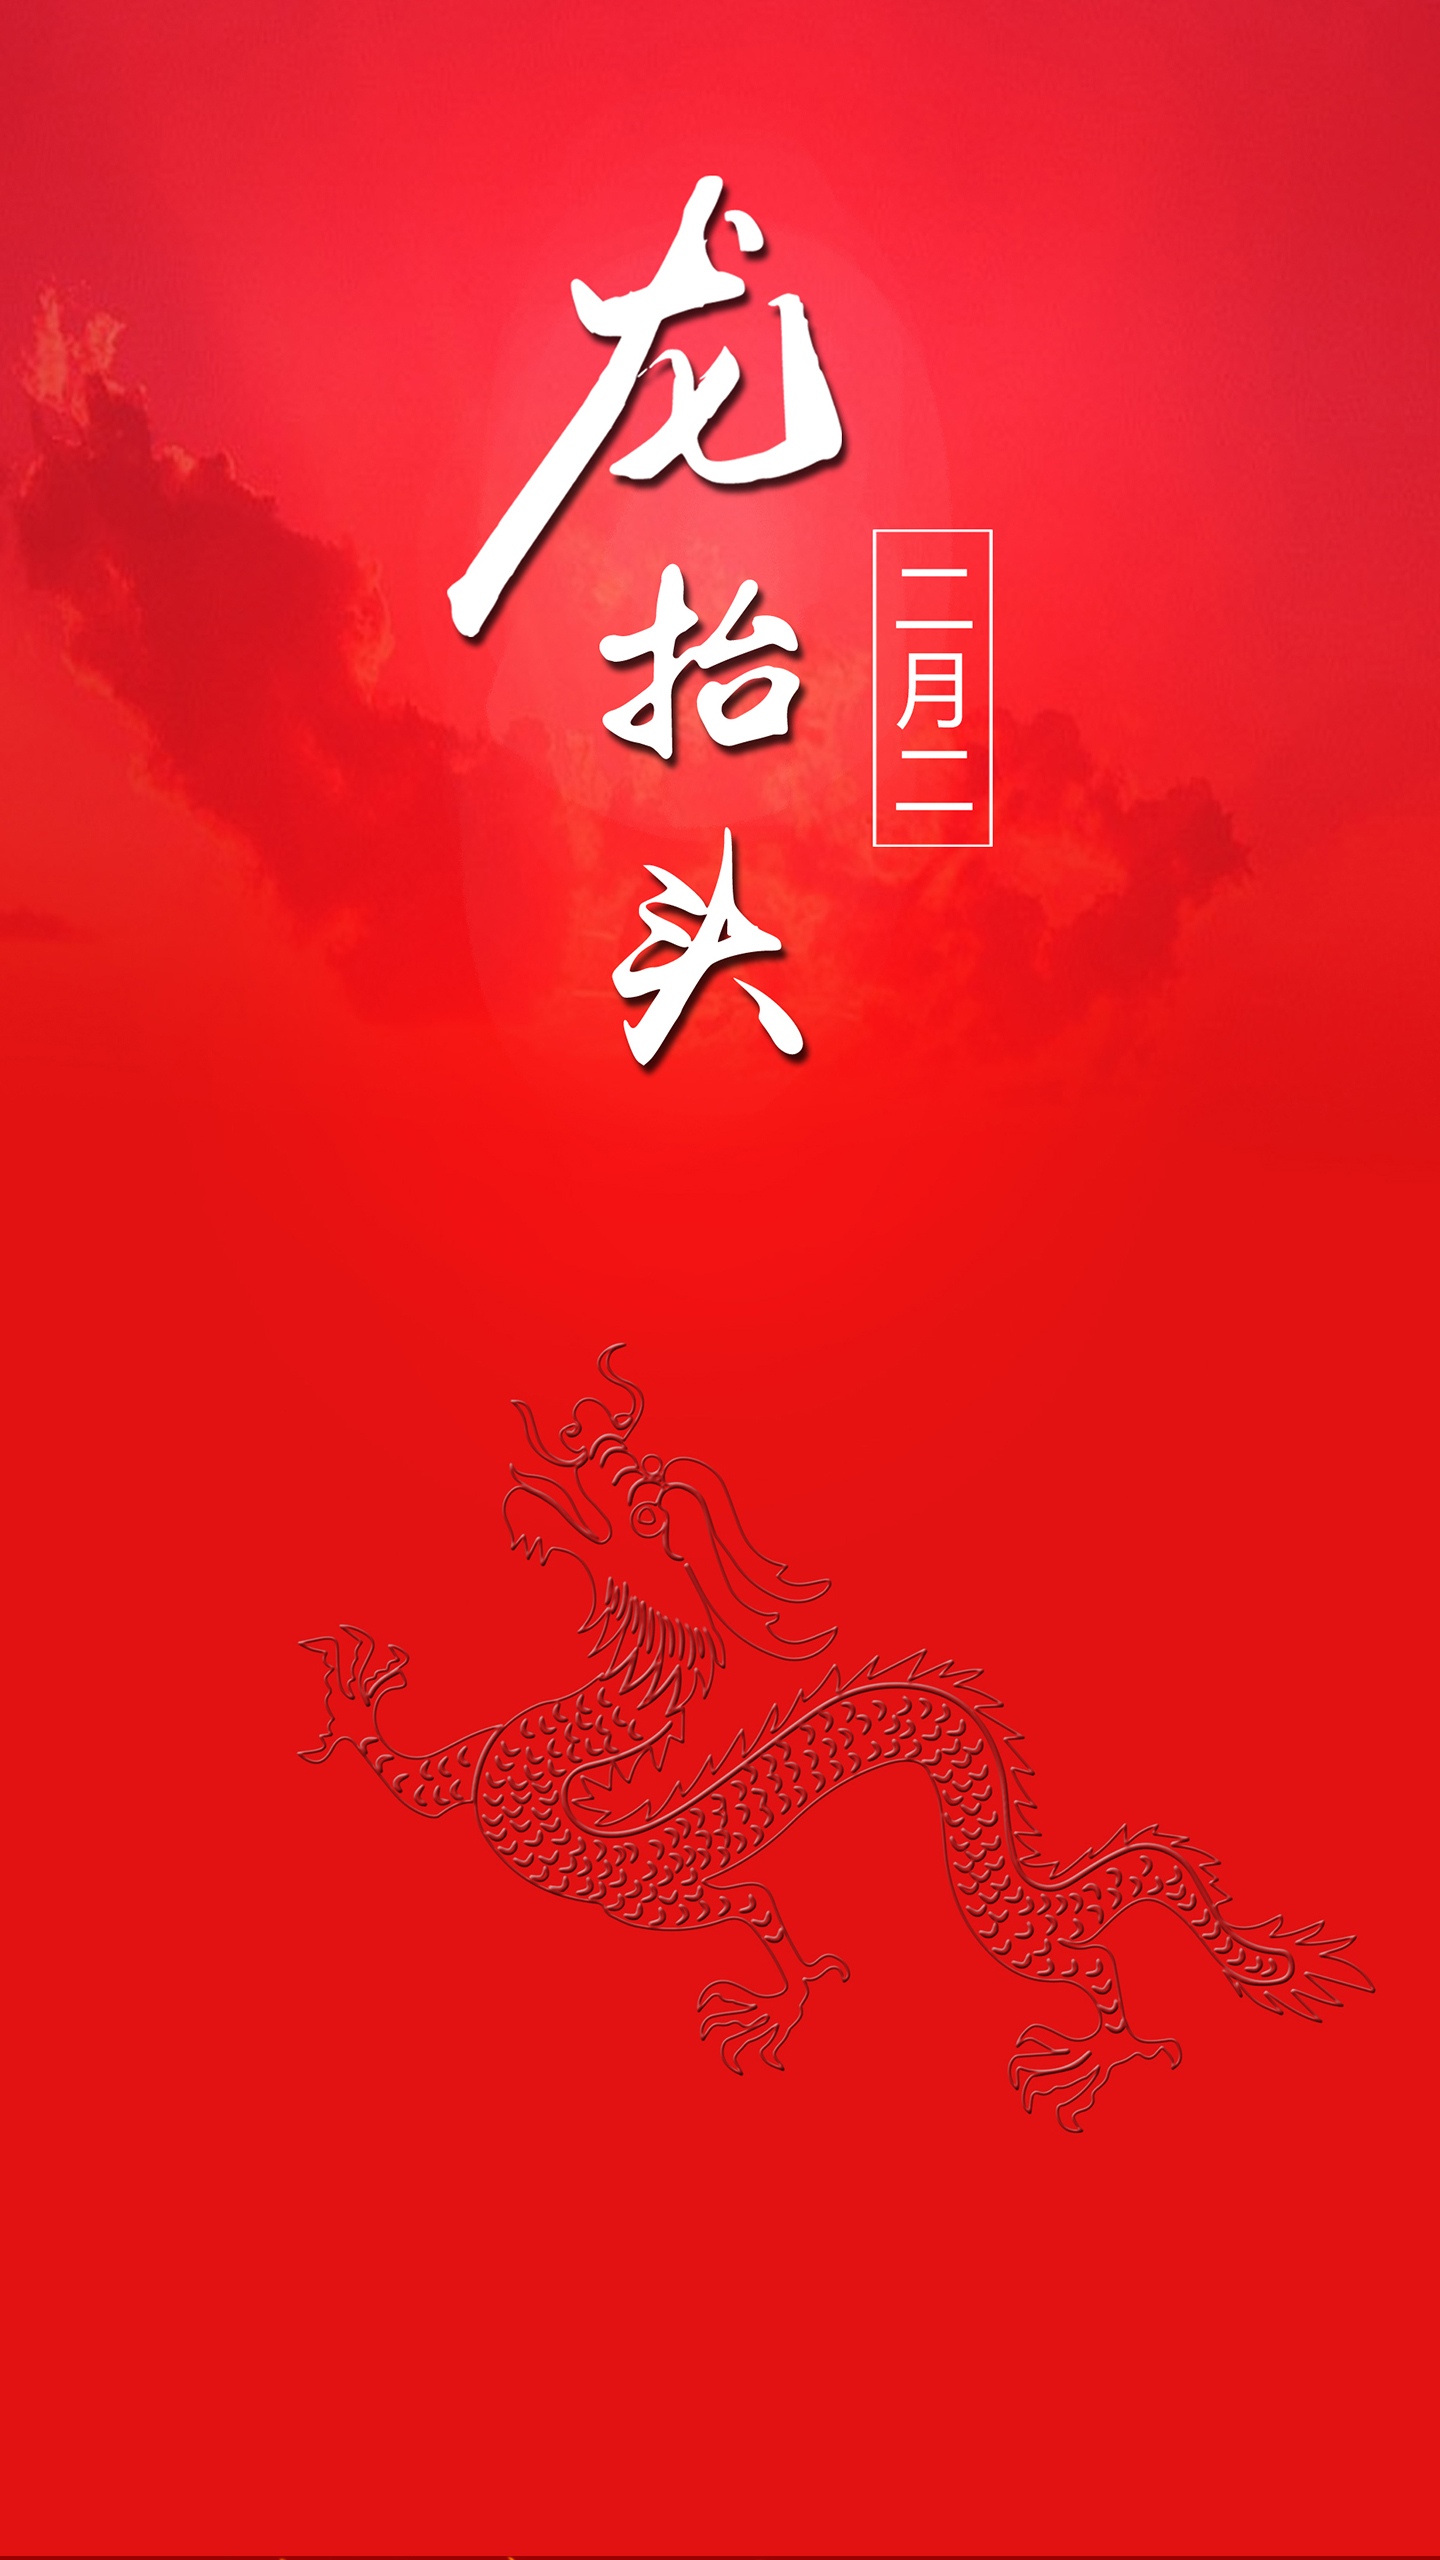 红色背景 二月二龙抬头文字手机壁纸图片 <span style='color:red;'>中国红</span>